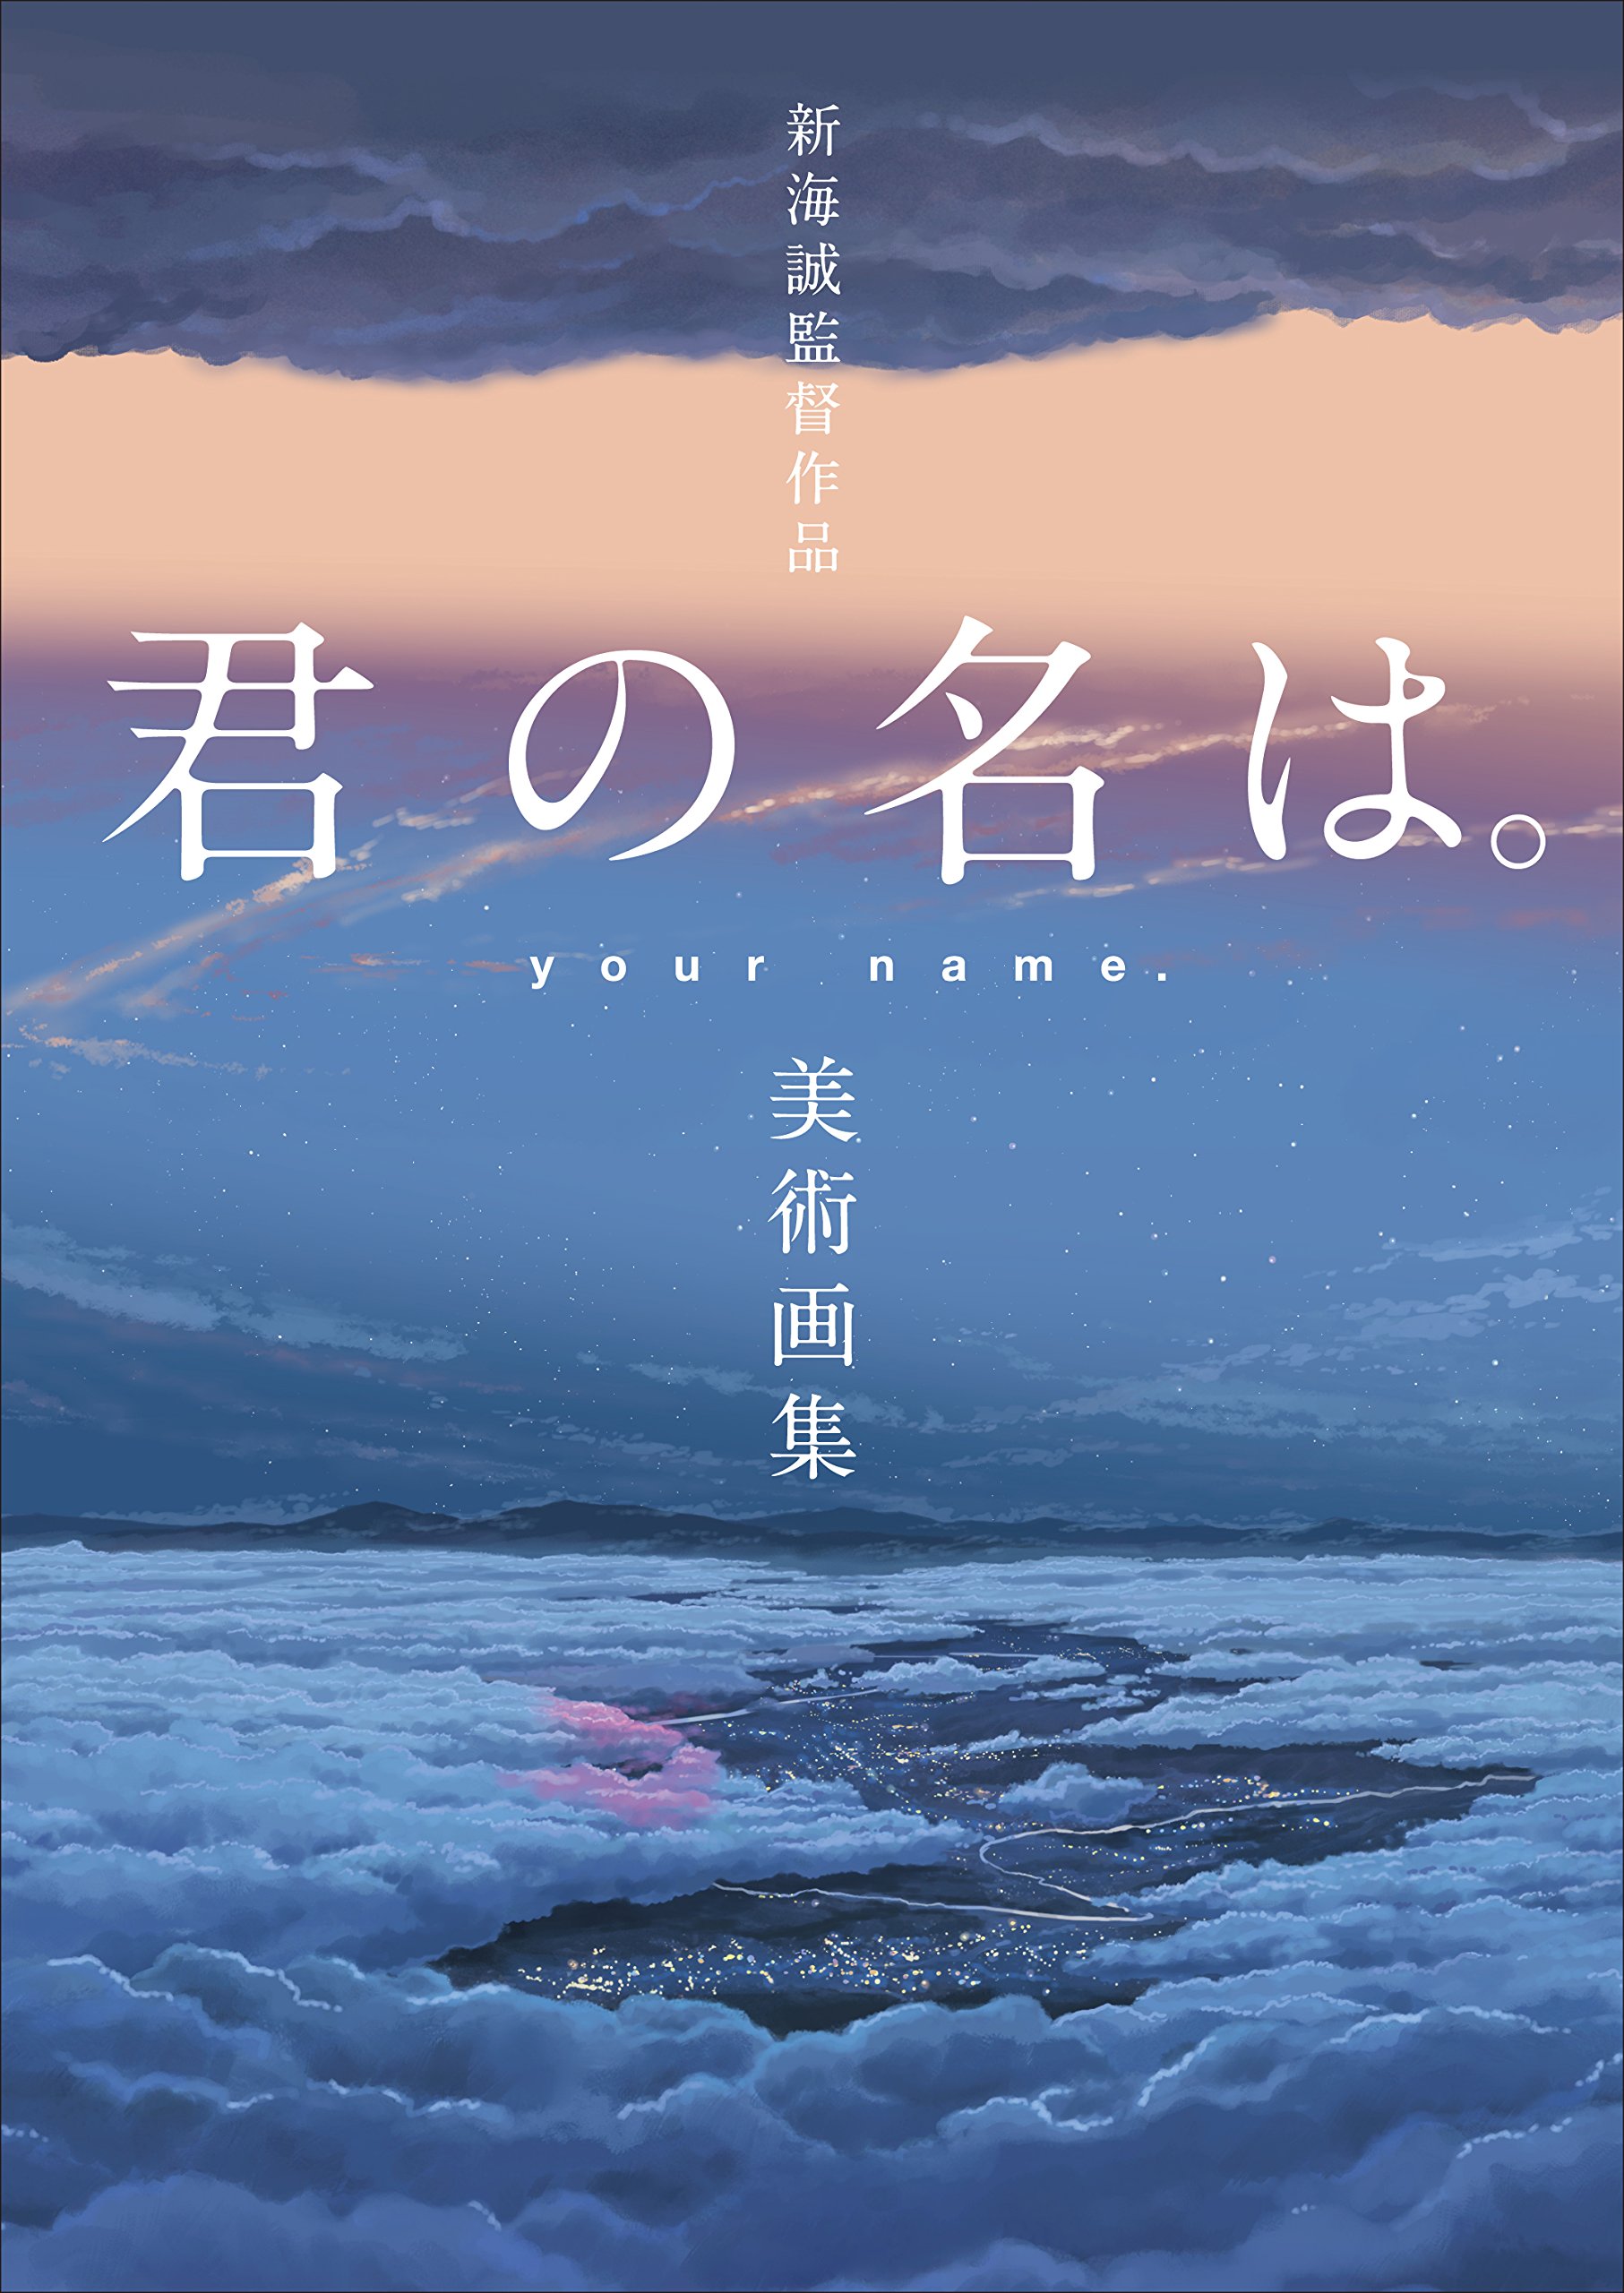 your name. (light novel) by Makoto Shinkai, Hardcover